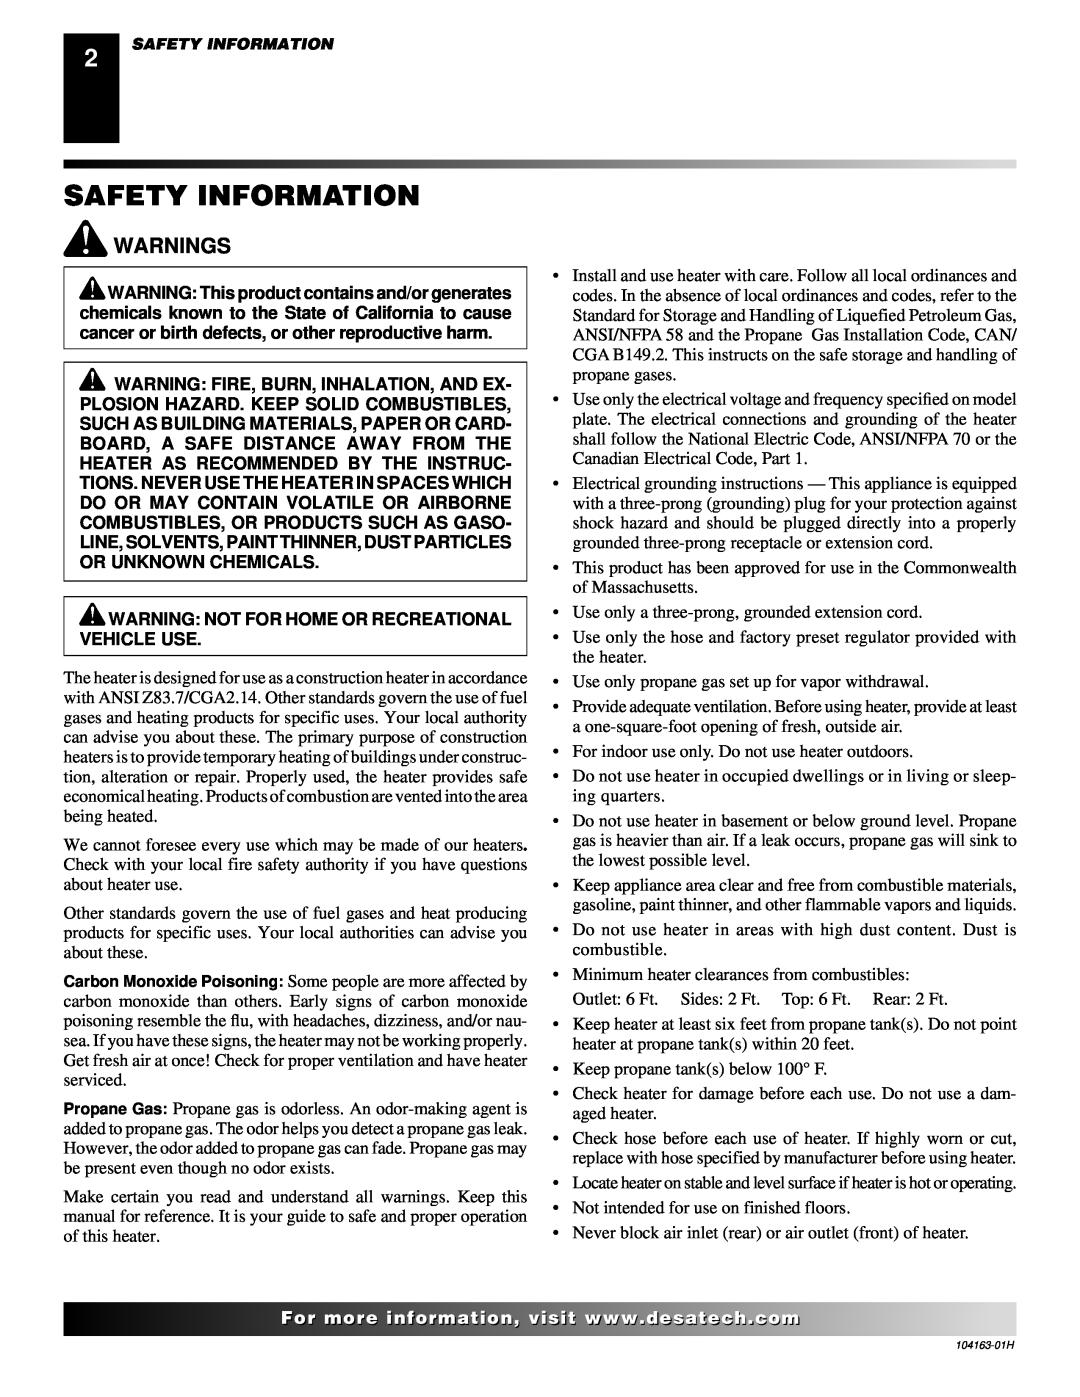 Desa REM30LP owner manual Safety Information, Warnings, Warning Not For Home Or Recreational Vehicle Use 